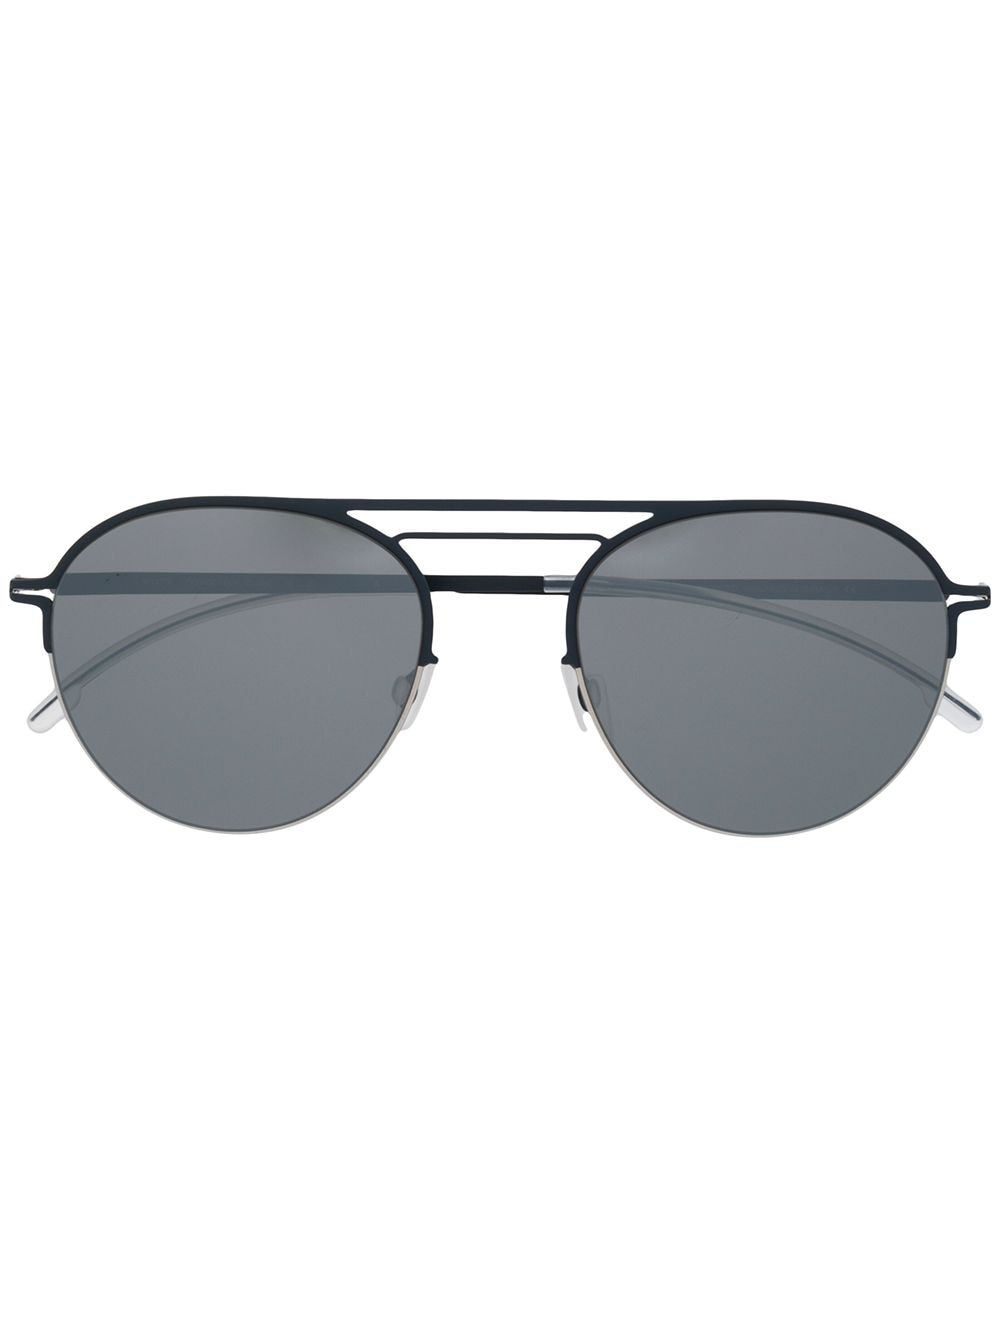 Image 1 of Mykita round-frame tinted sunglasses